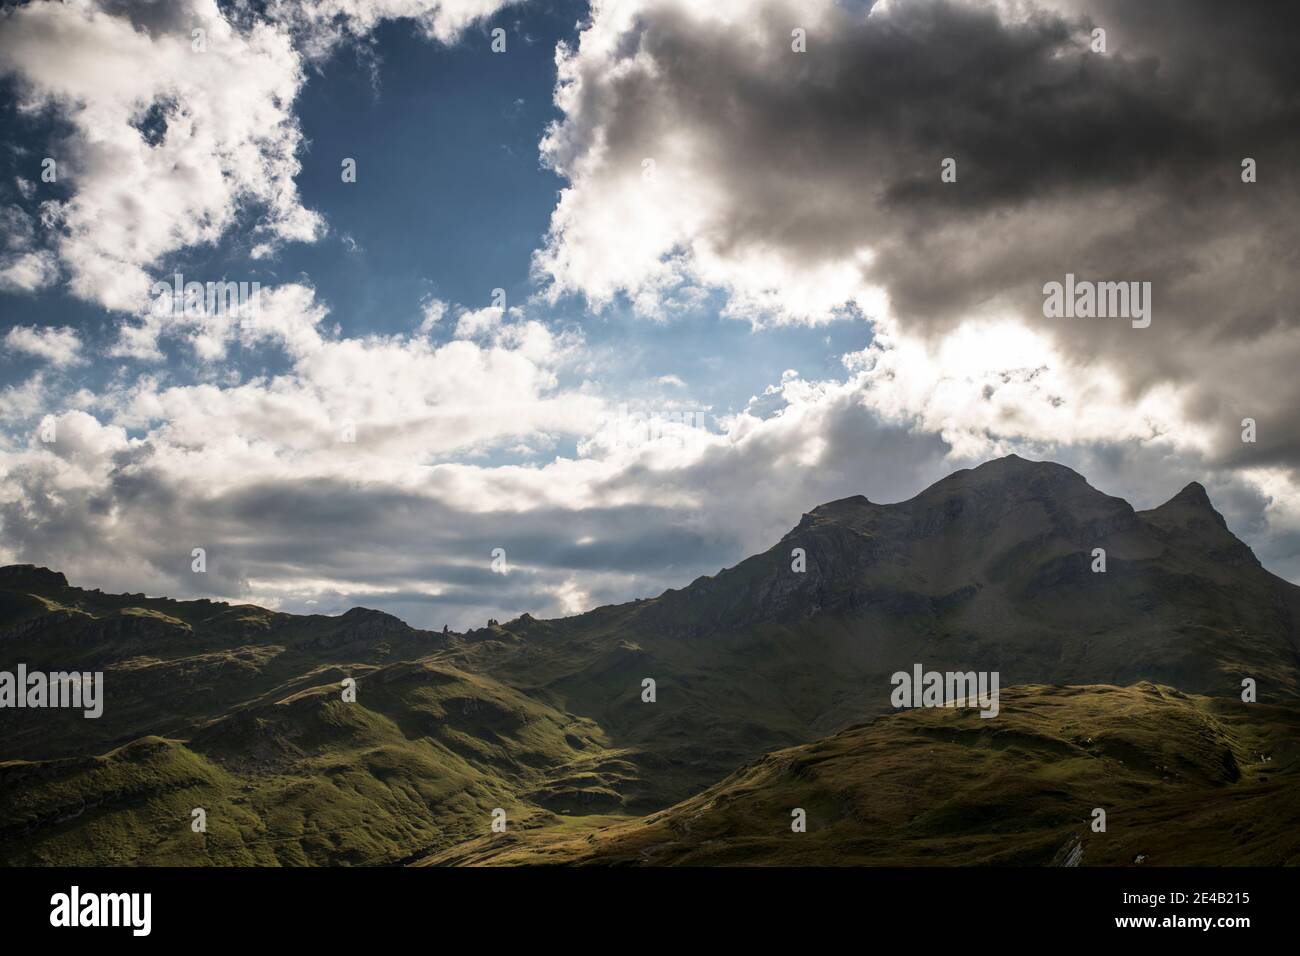 Summer evening on the Alp, thunderstorm mood Stock Photo